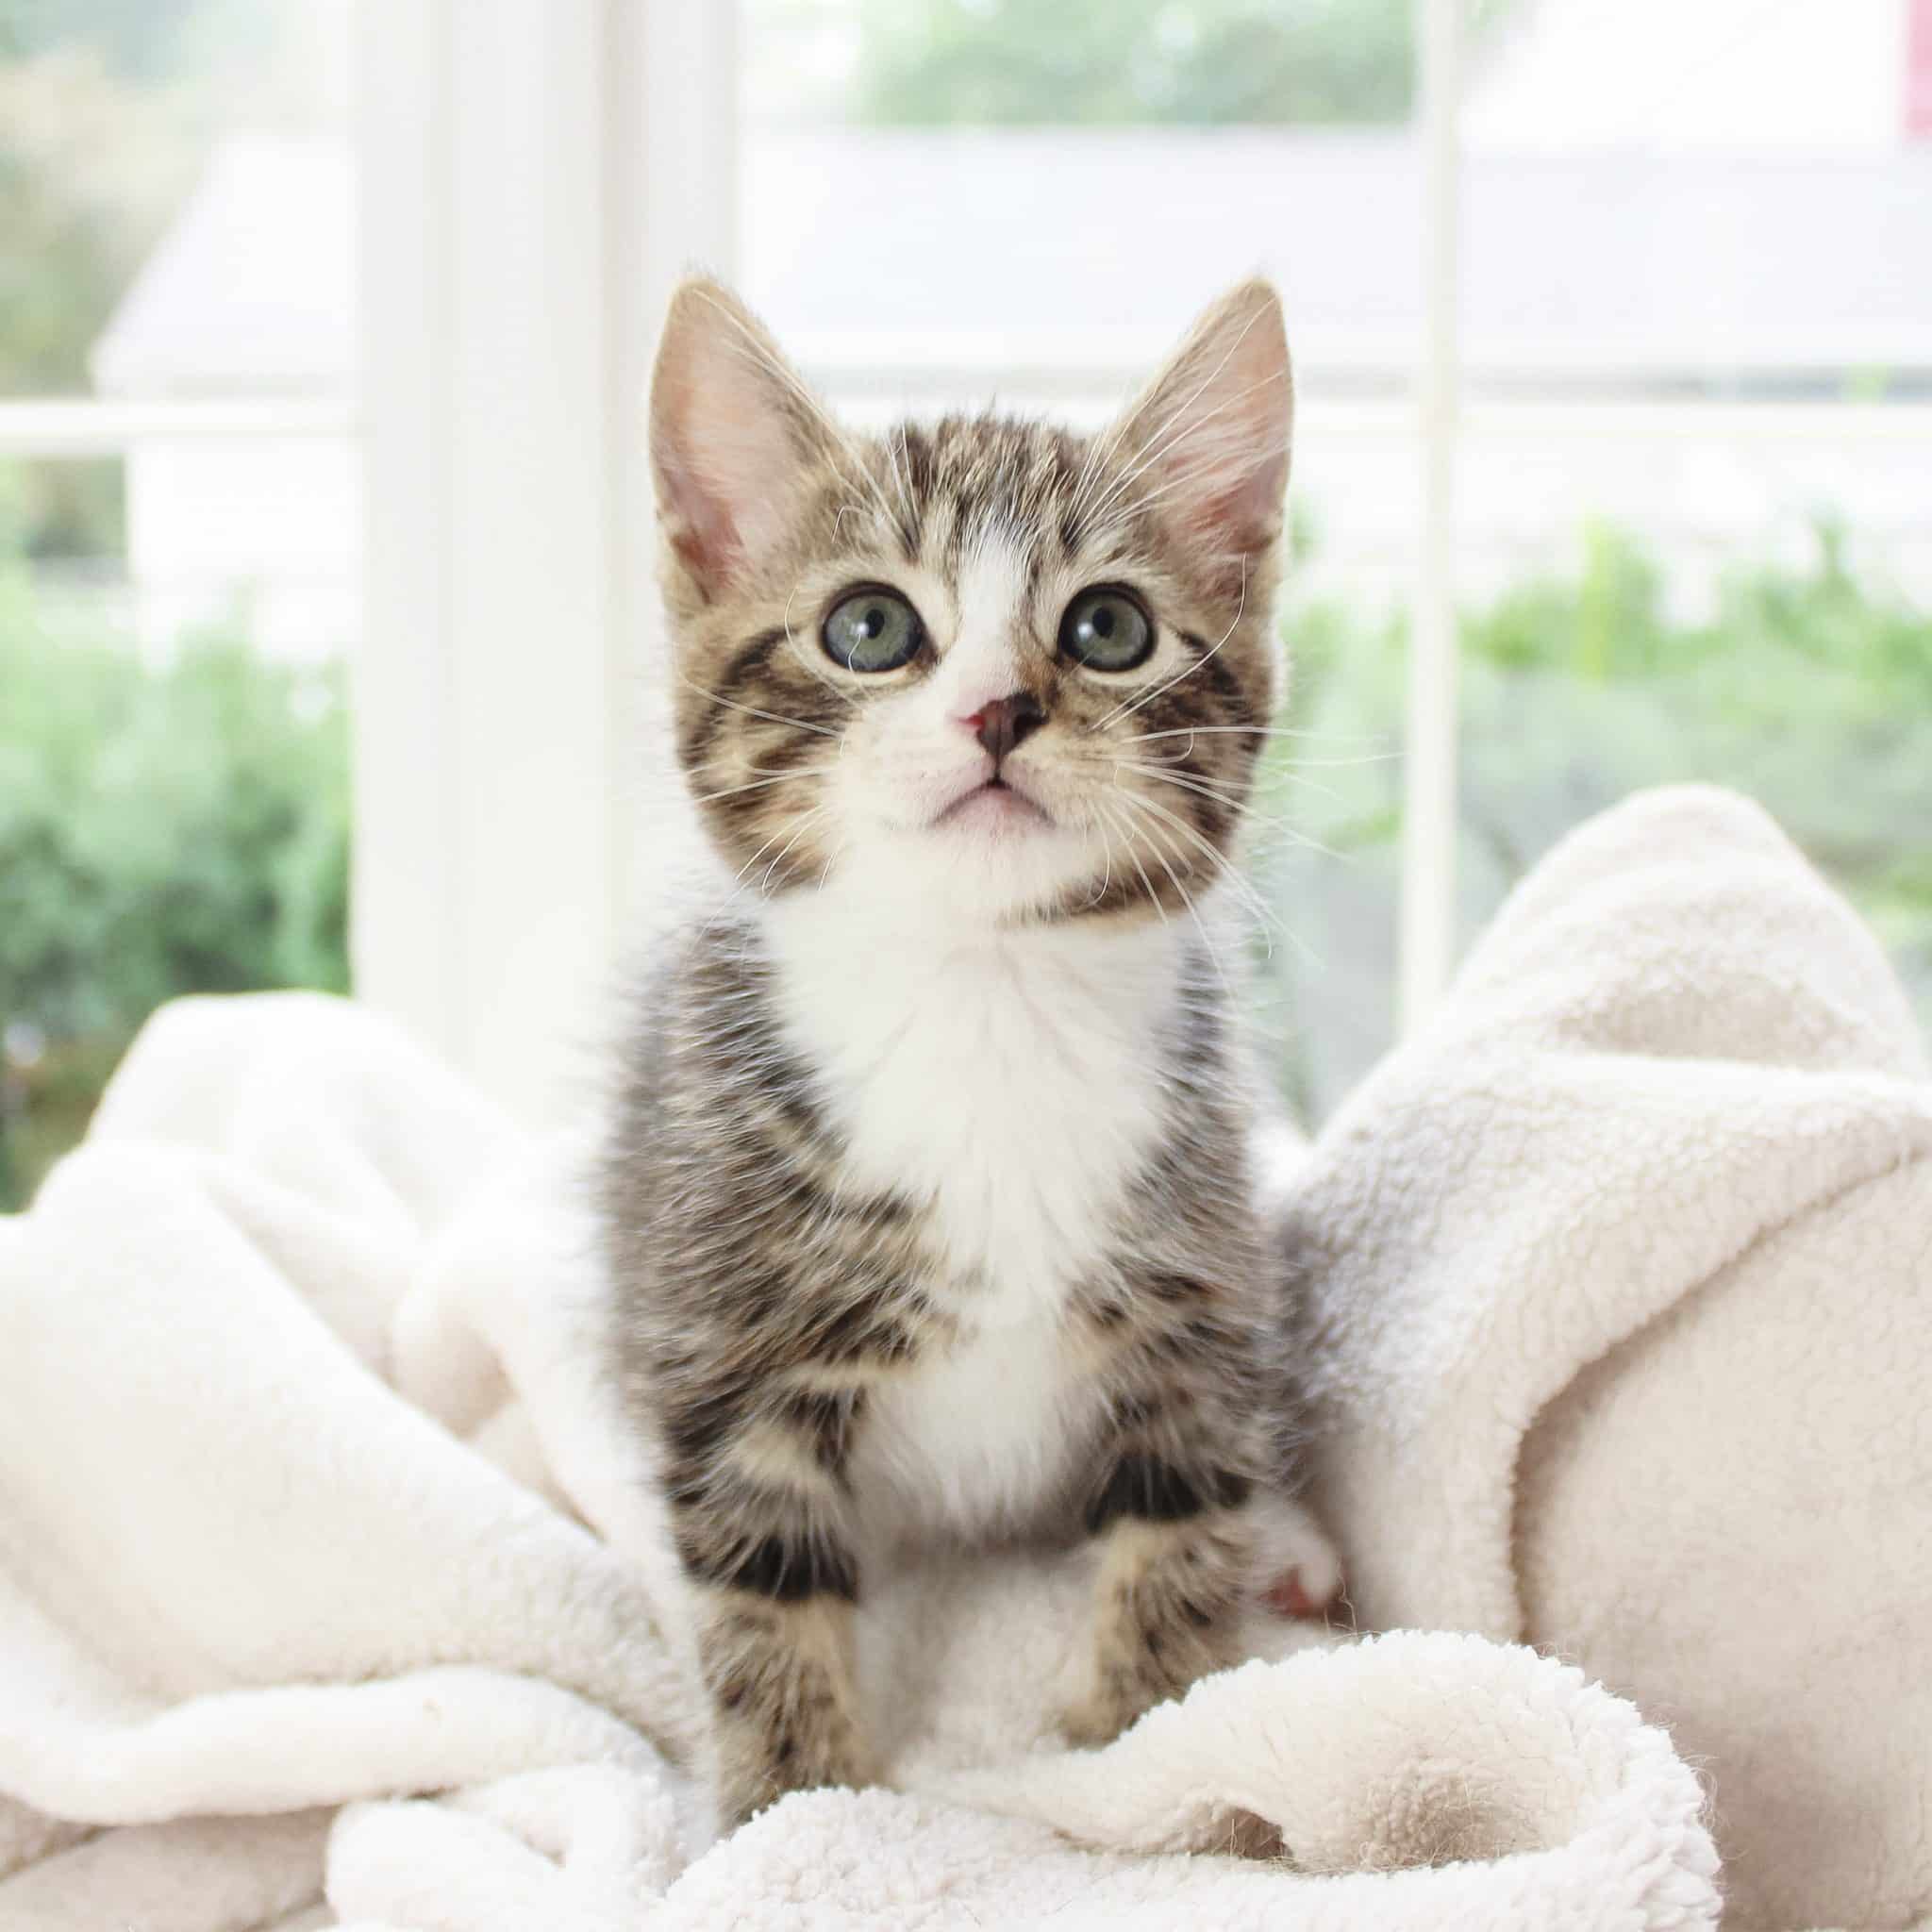 striped kitten on white towel